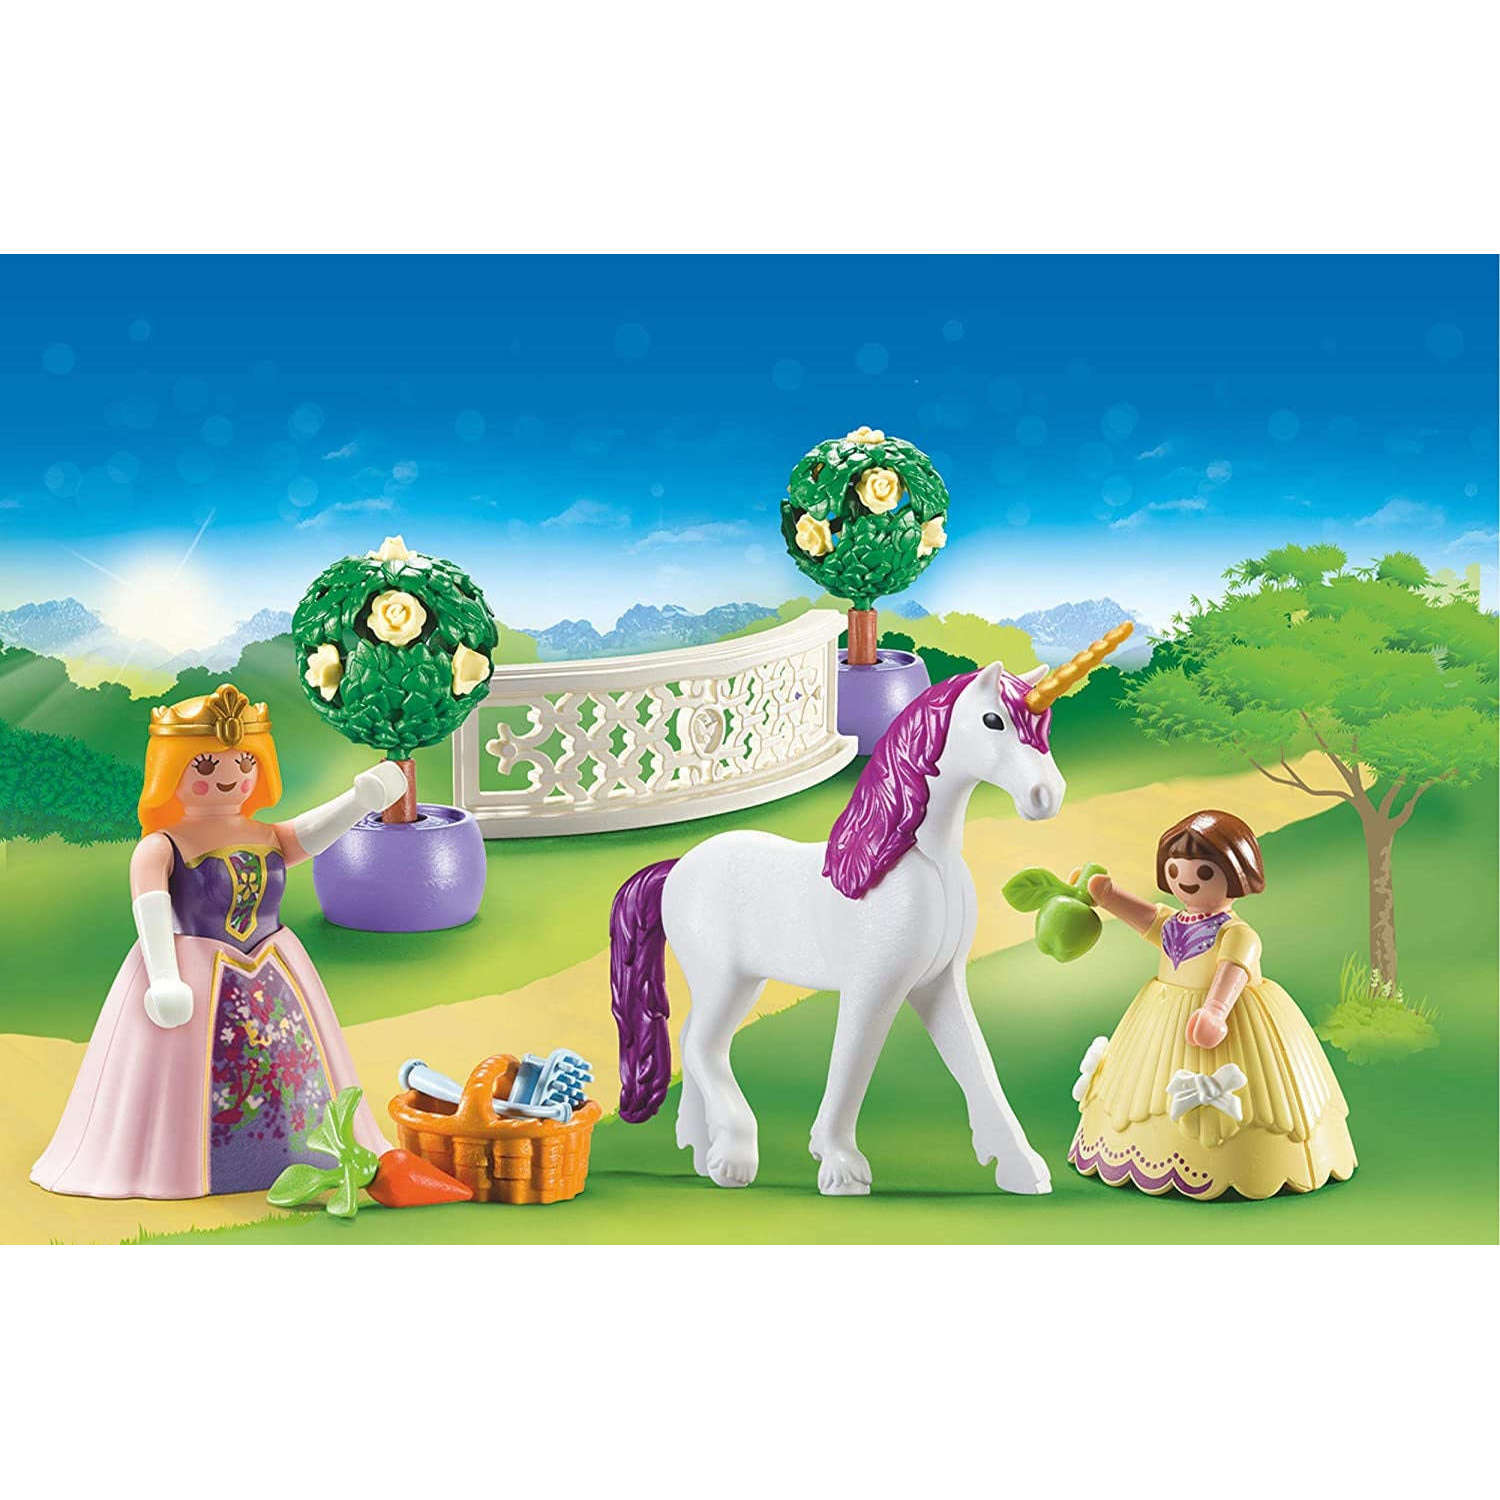 Toys N Tuck:Playmobil 70107 Princess Unicorn Carry Case,Playmobil